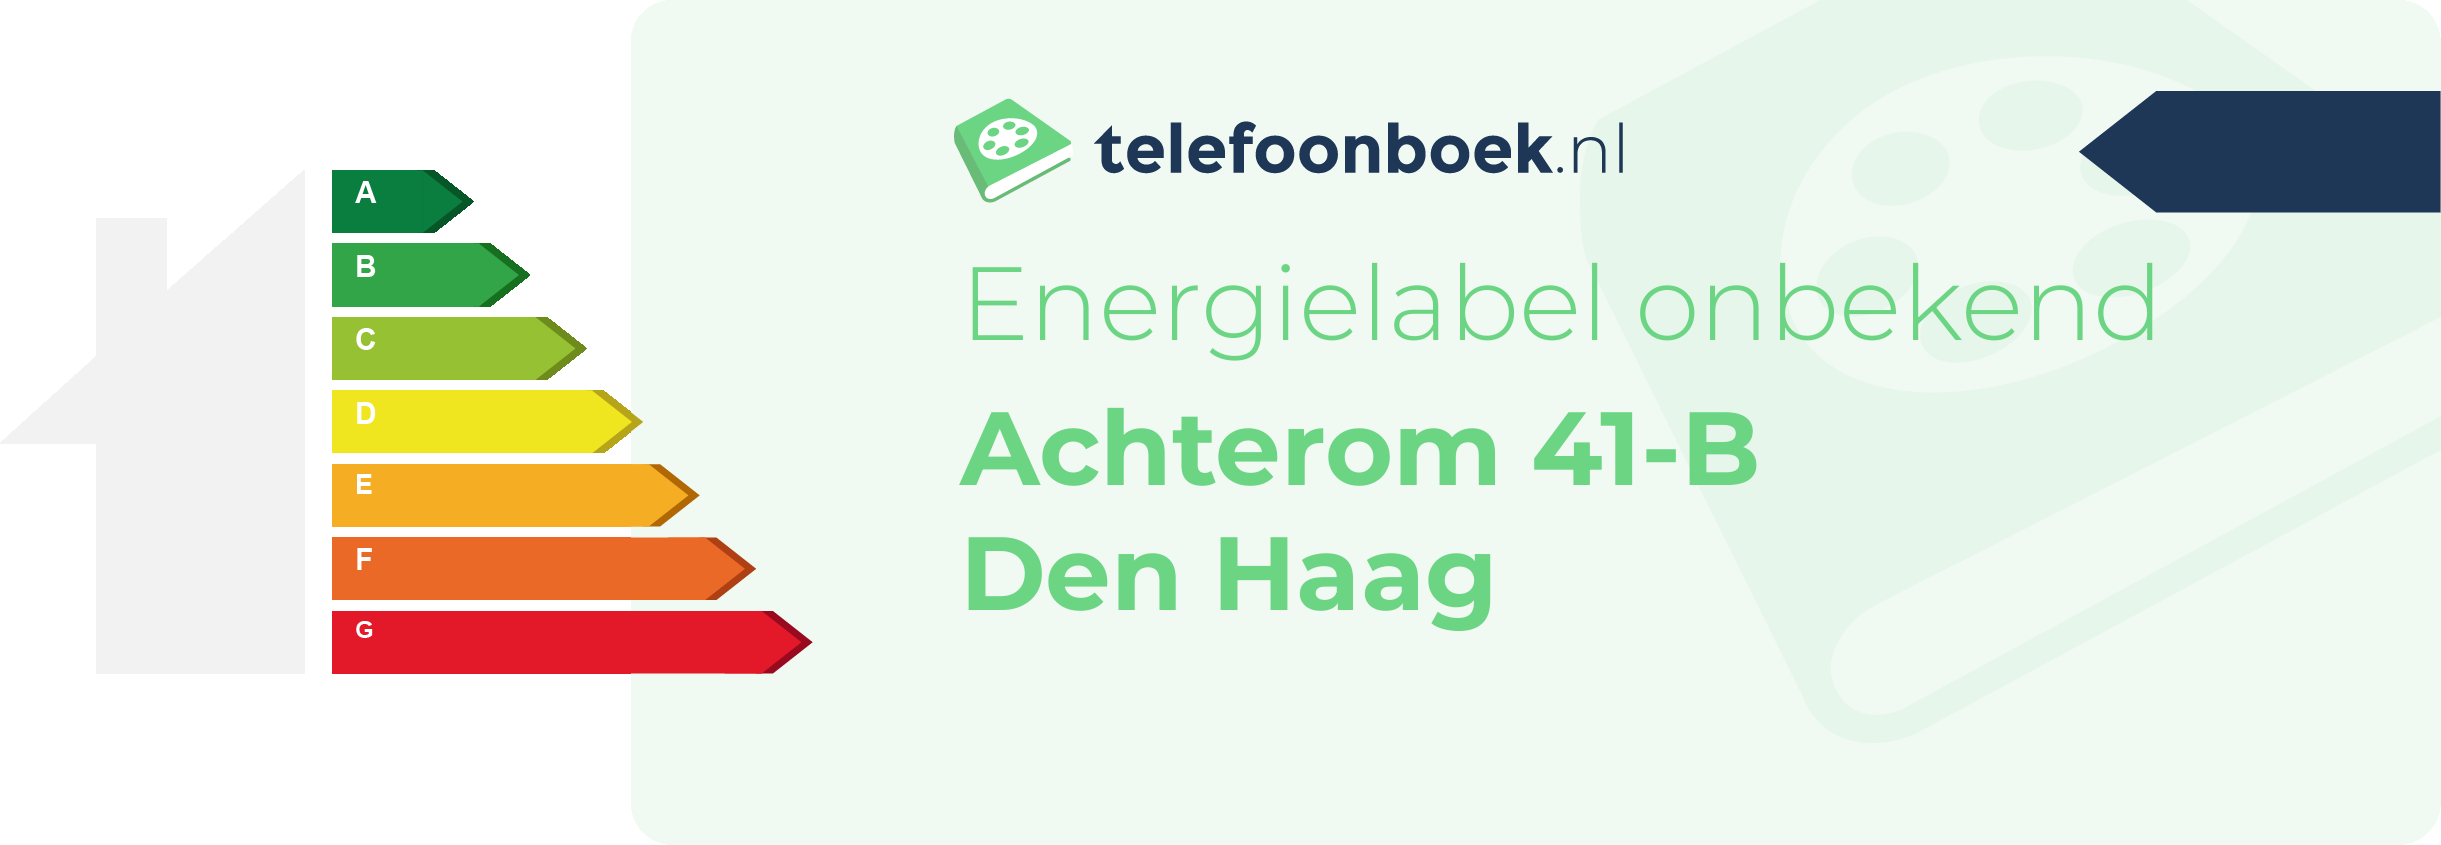 Energielabel Achterom 41-B Den Haag